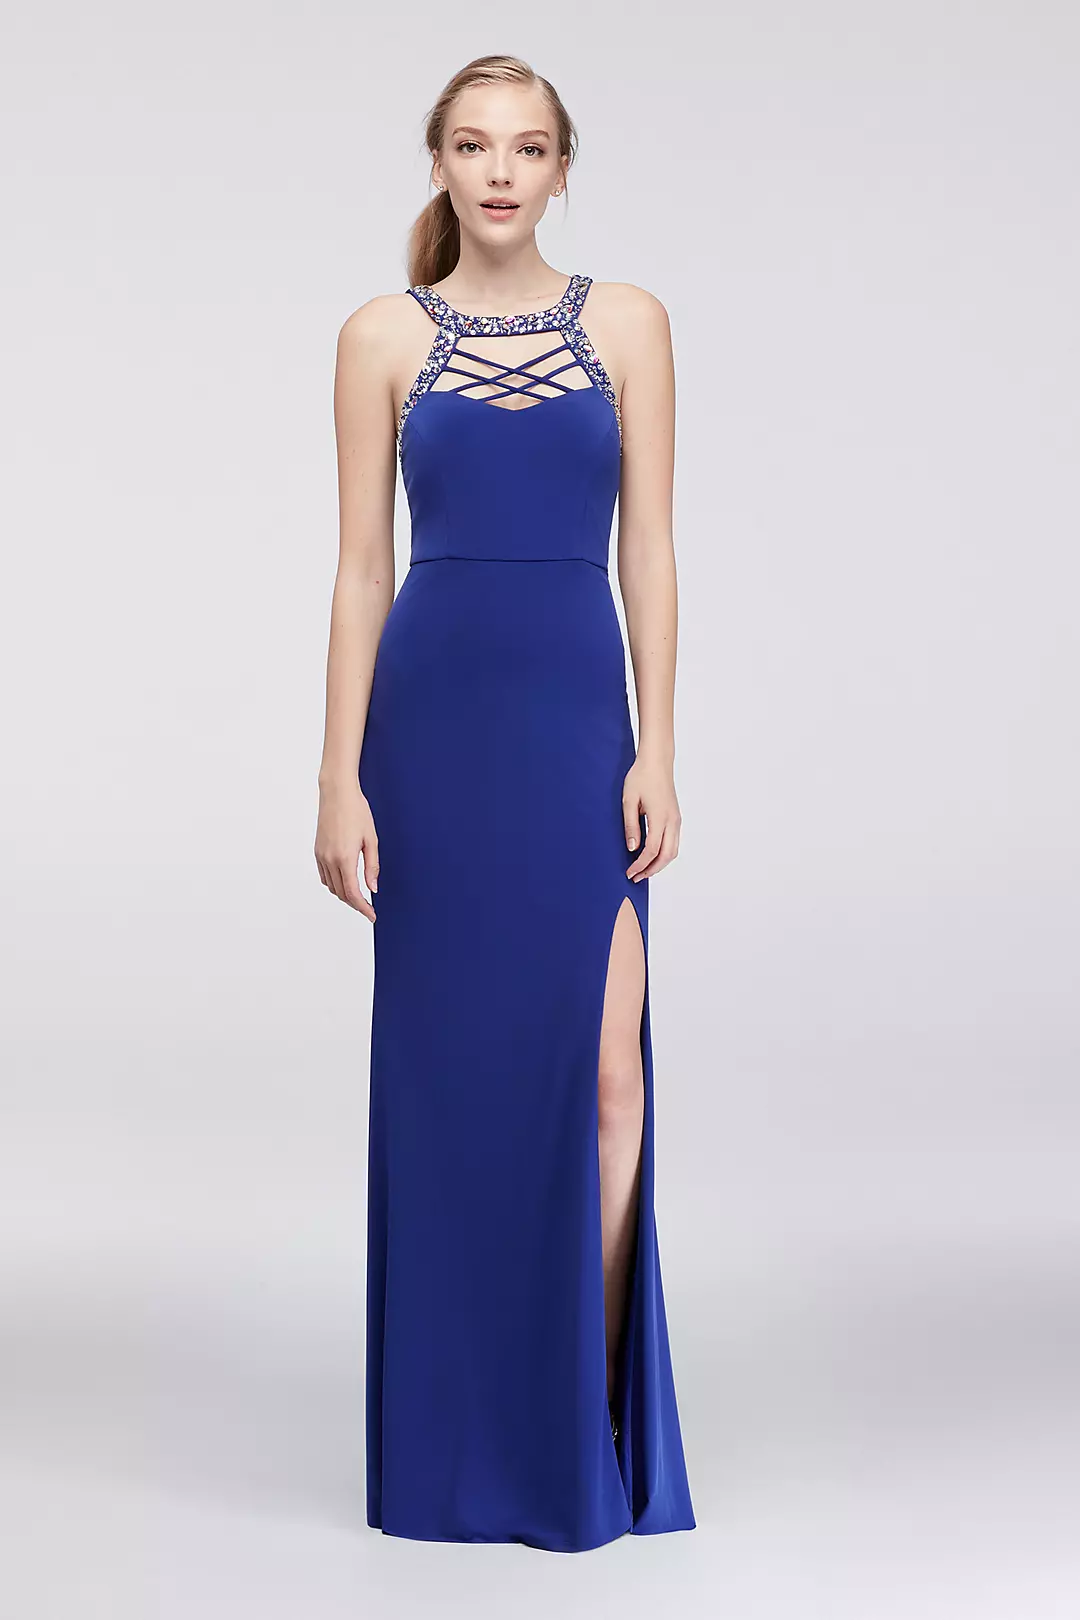 Crisscross Bodice Sheath Dress with Jewel Details Image